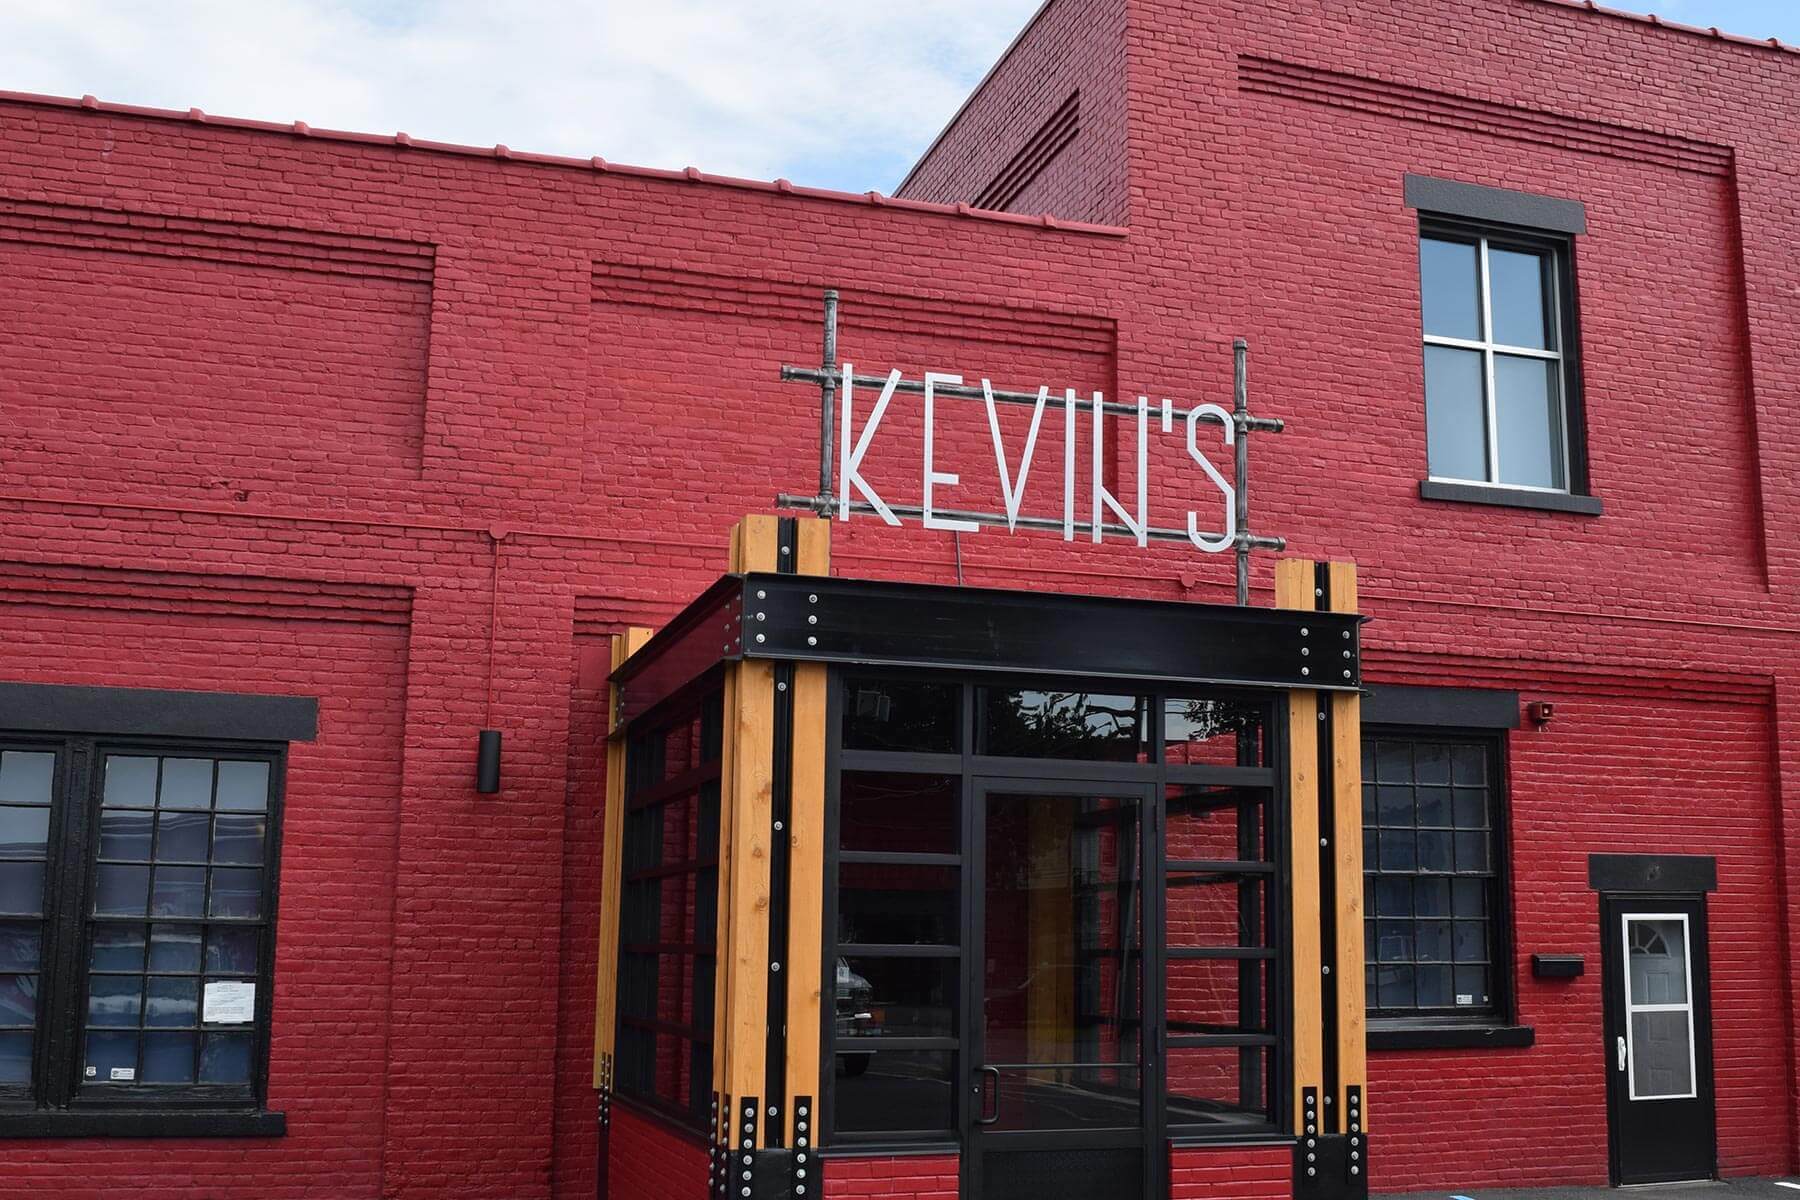 Kevin's Restaurant